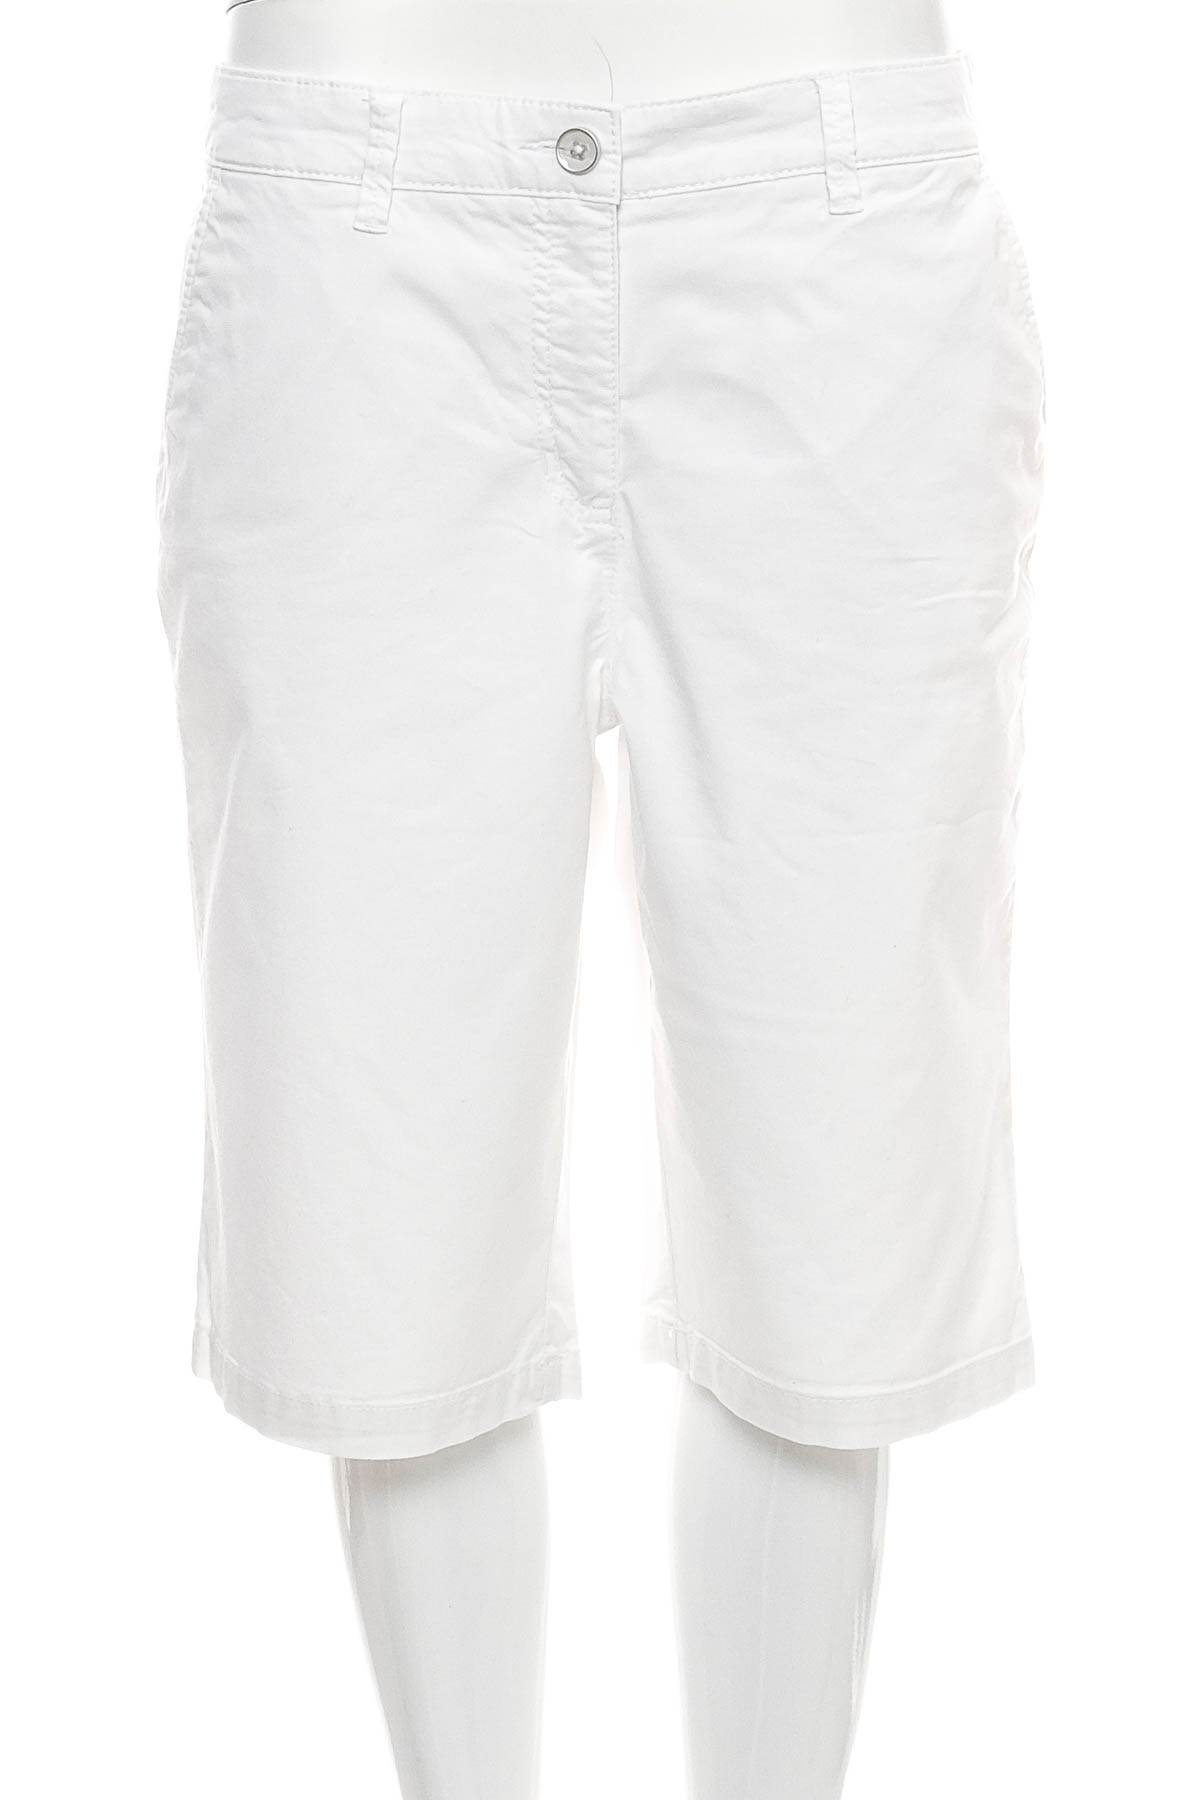 Female shorts - Garnaby's - 0